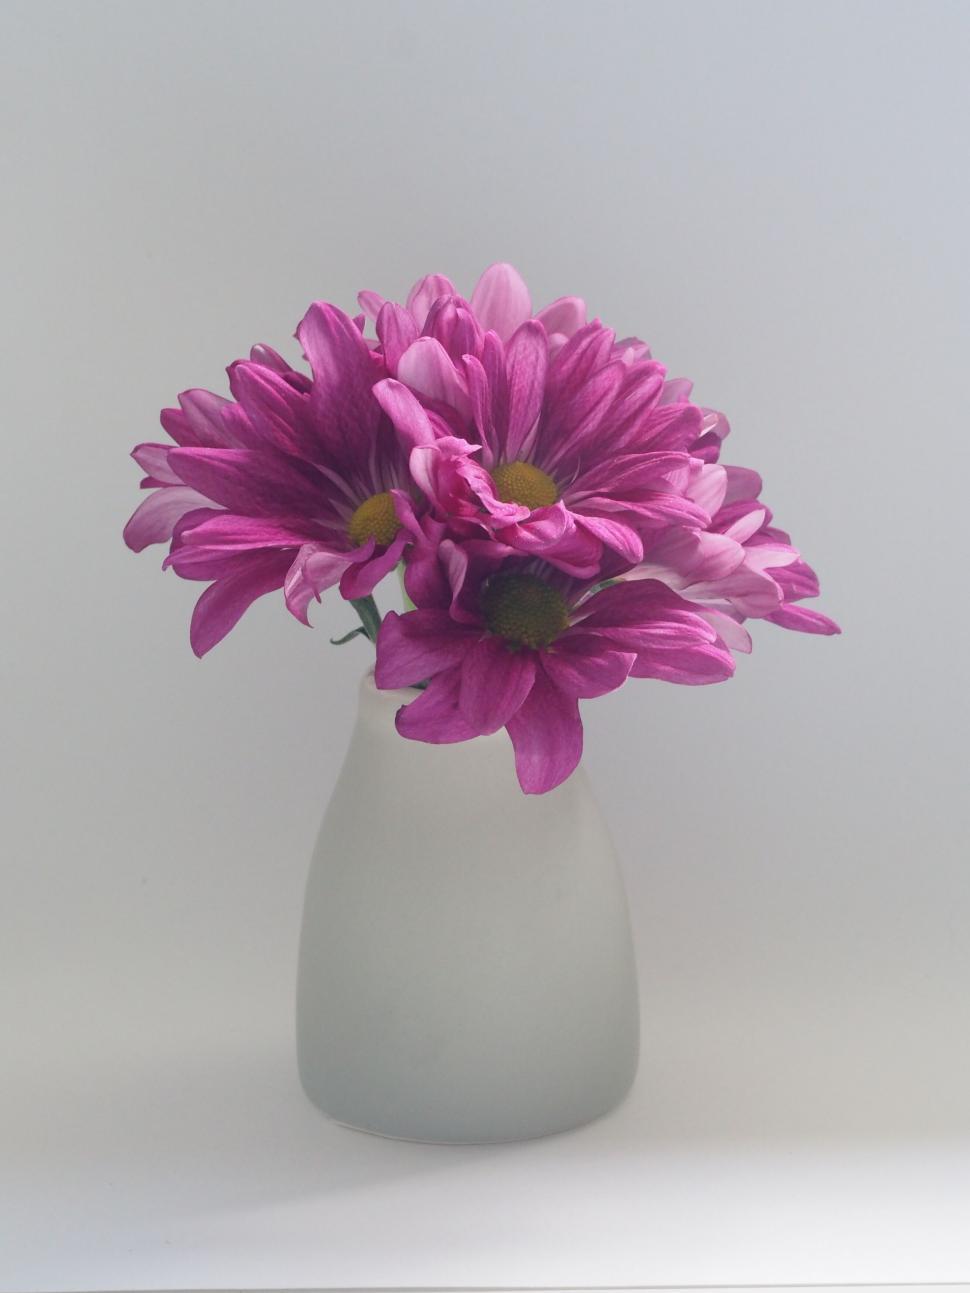 Free Image of Pink chrysanthemums in a white vase 